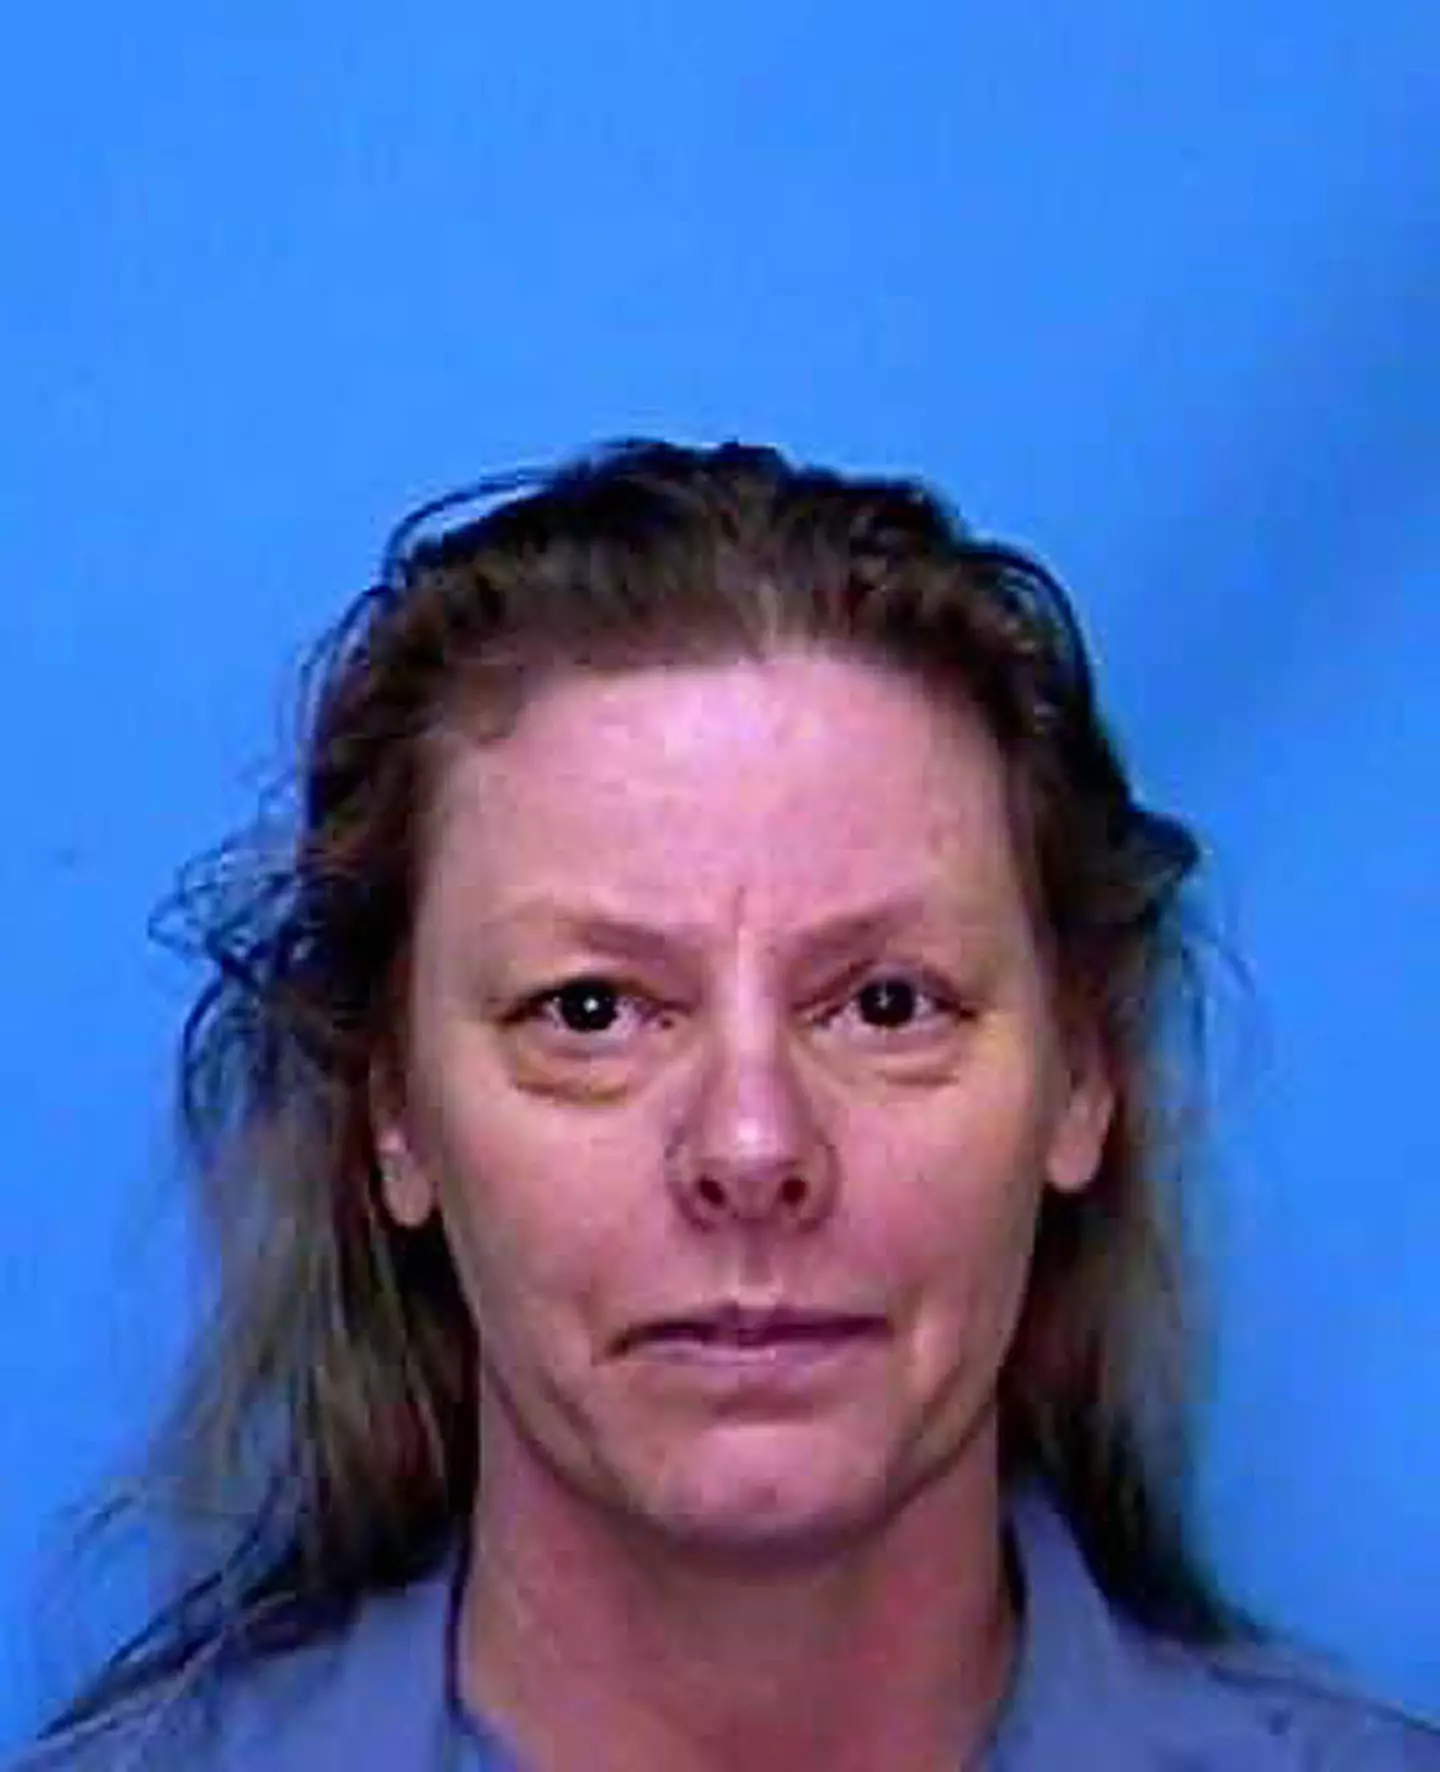 Aileen Wuornos was found guilty of killing seven men.